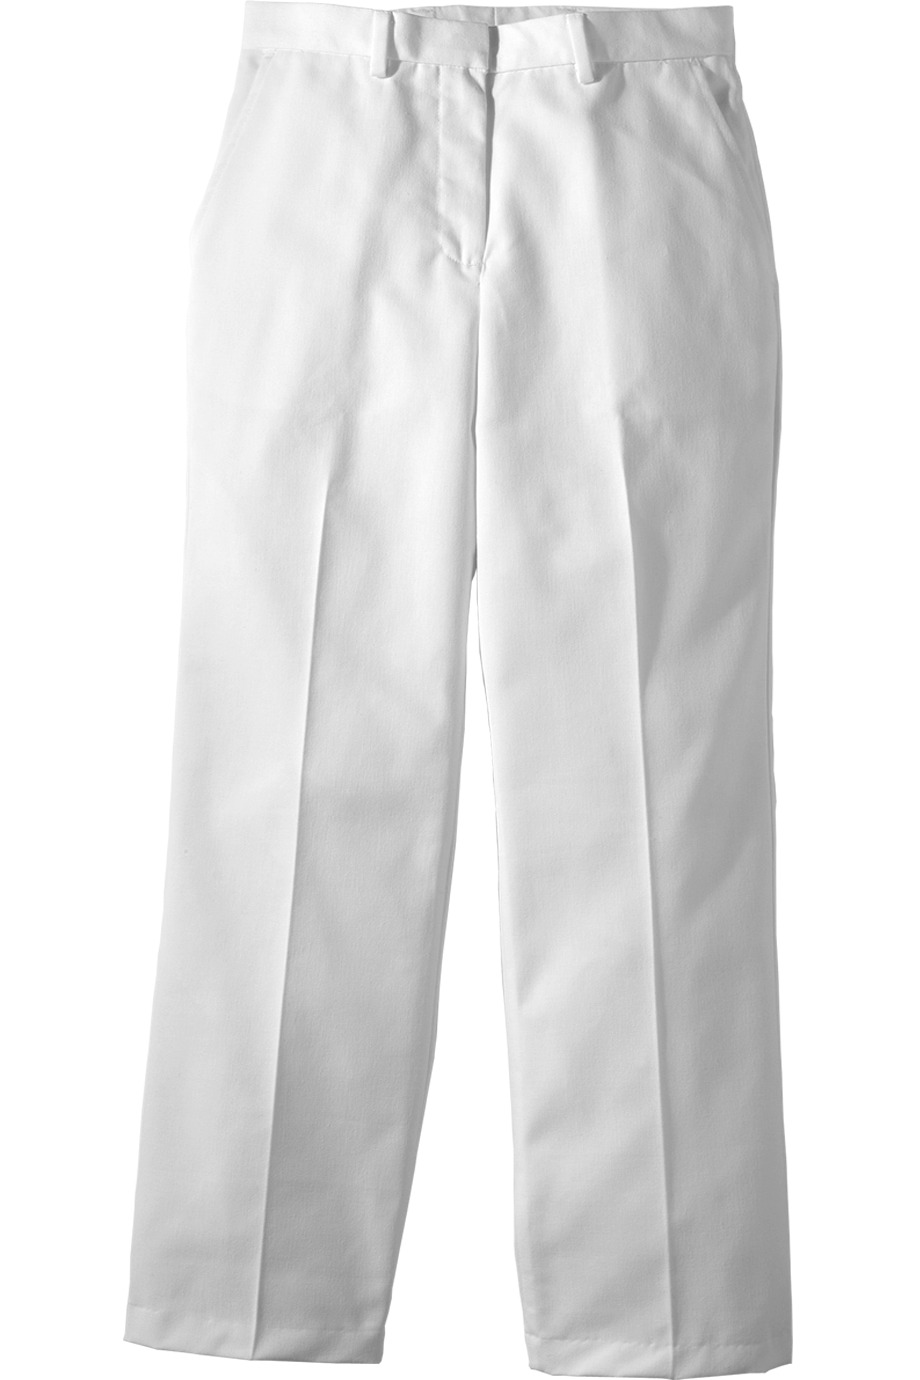 Edwards Garment 8519 - Women's Business Casual Flat Front Pant